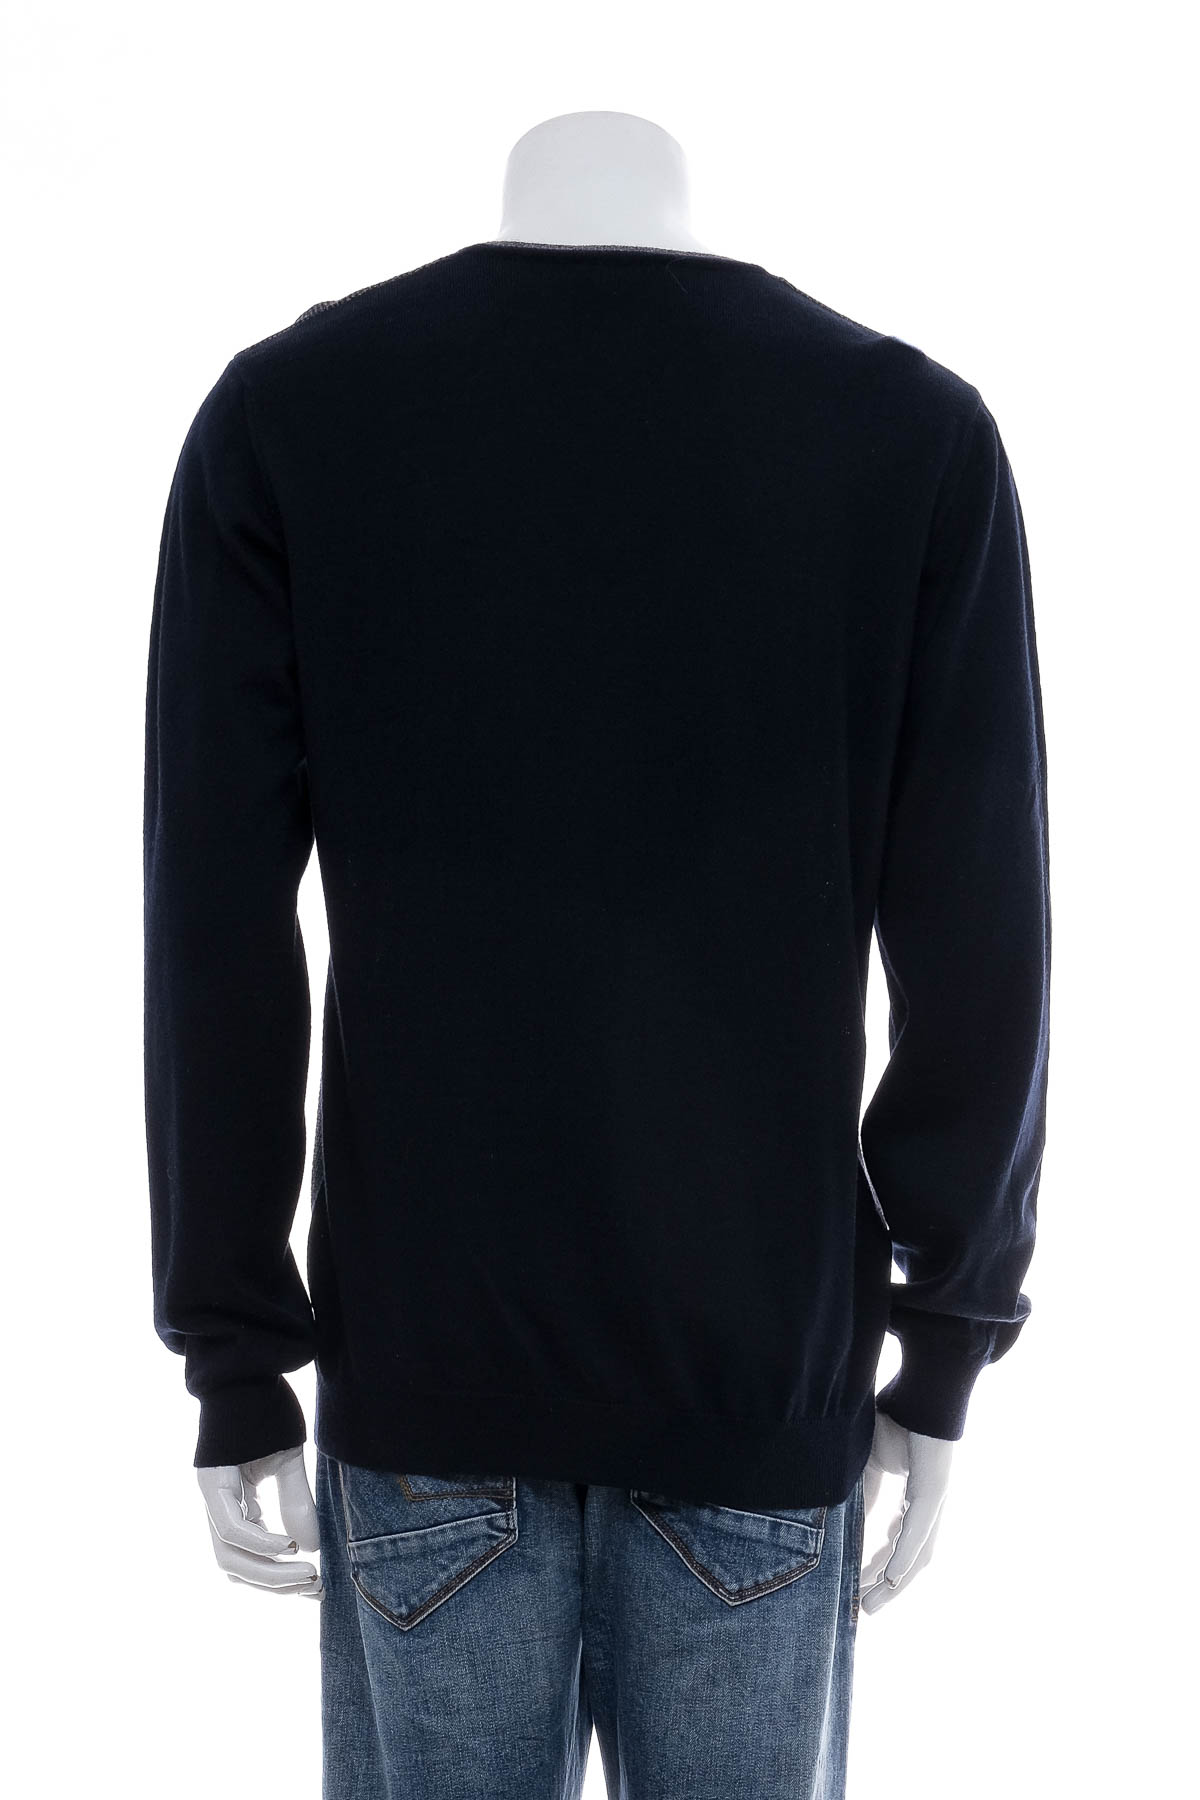 Men's sweater - S.R.UOMO - 1